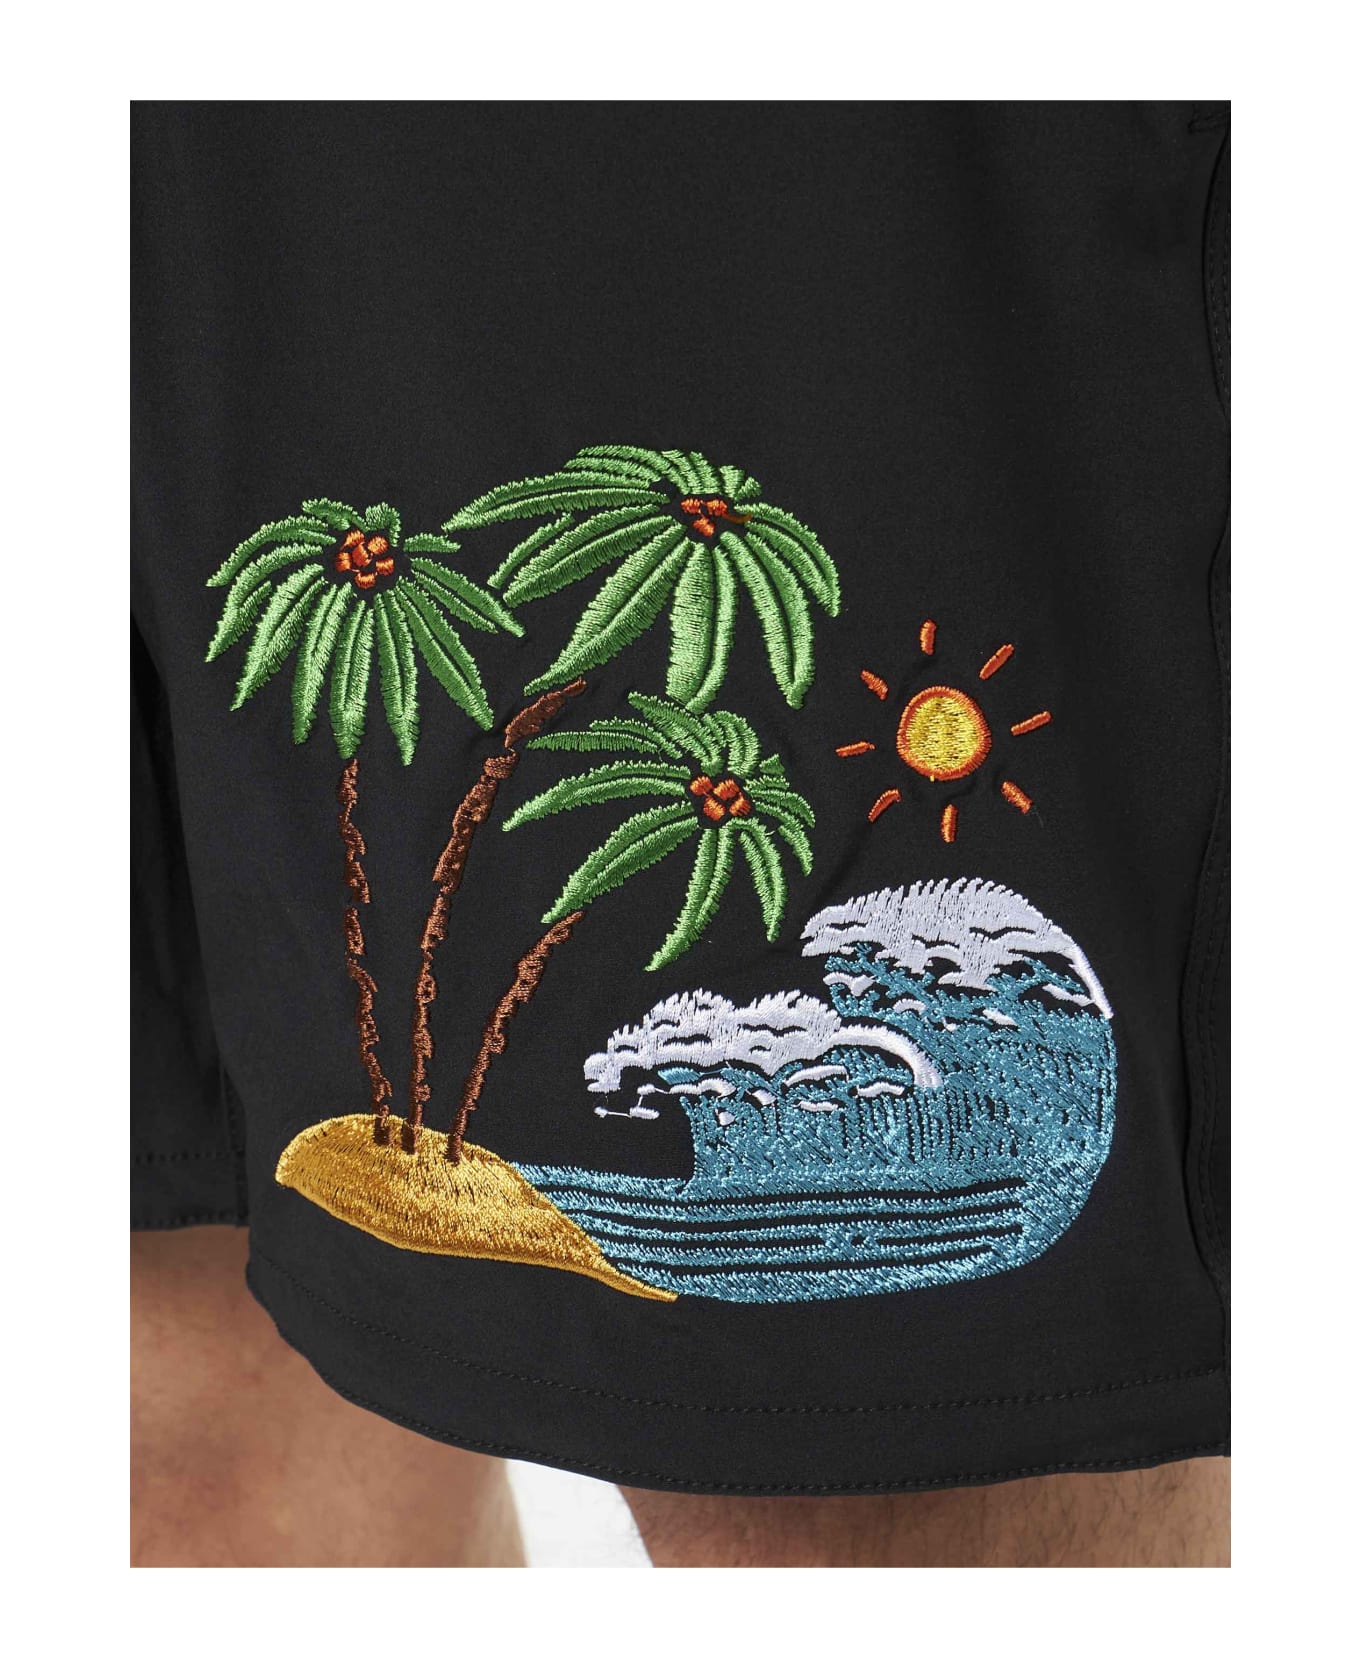 MC2 Saint Barth Man Comfort And Stretch Surf Shorts With Palm Print - BLACK